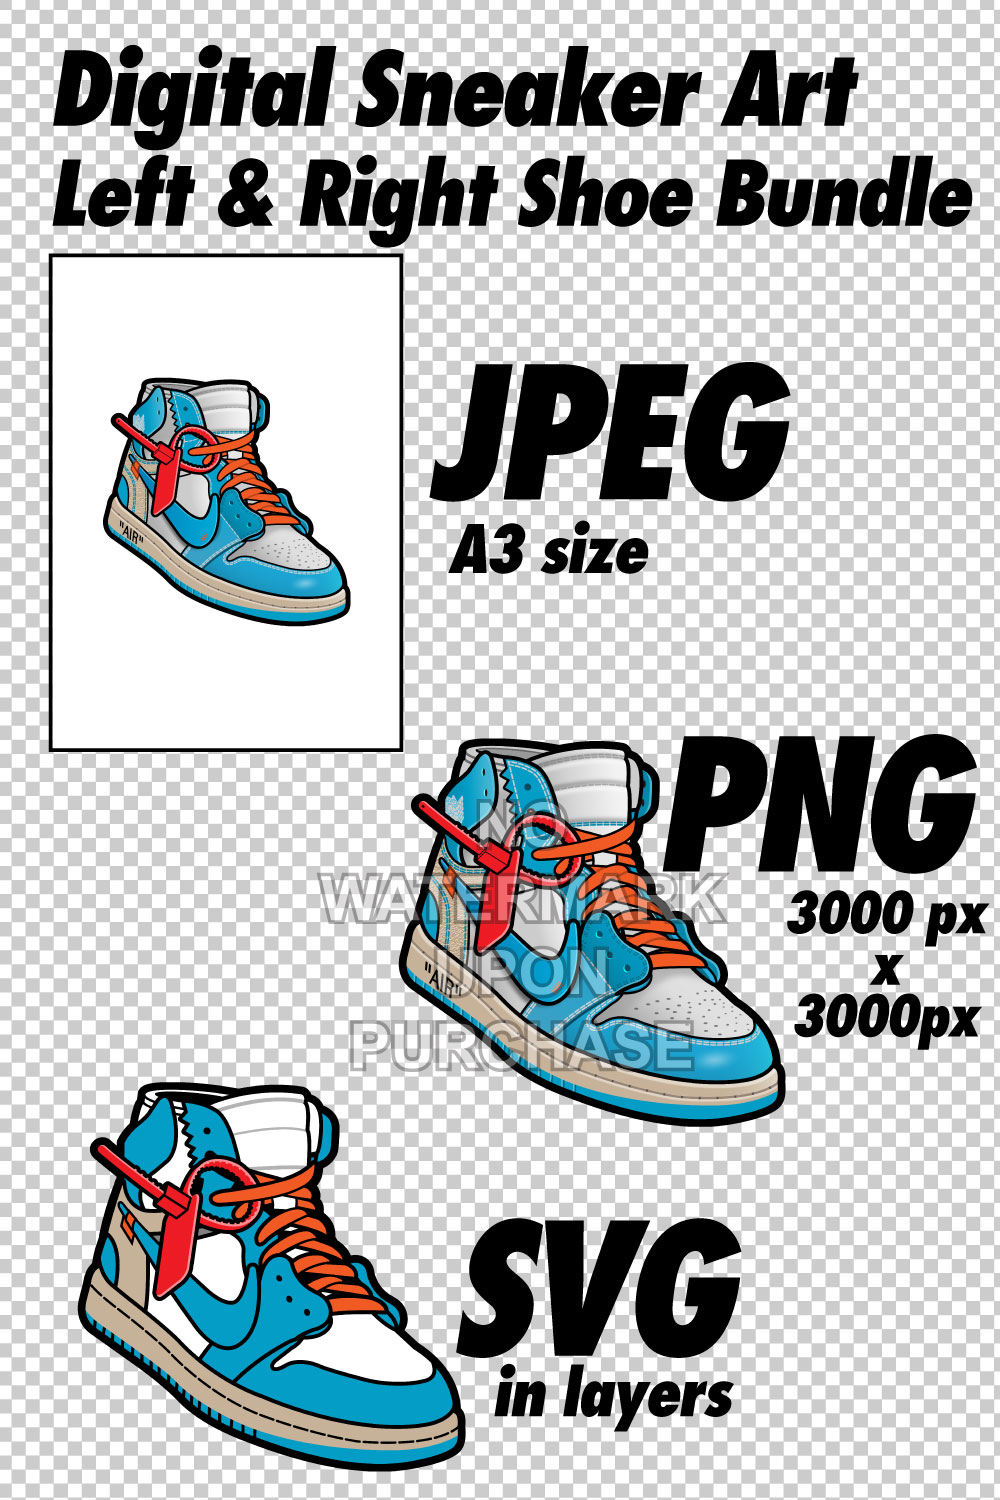 Air Jordan 1 Off White UNC JPEG PNG SVG Sneaker Art right & left shoe bundle Digital Download pinterest preview image.